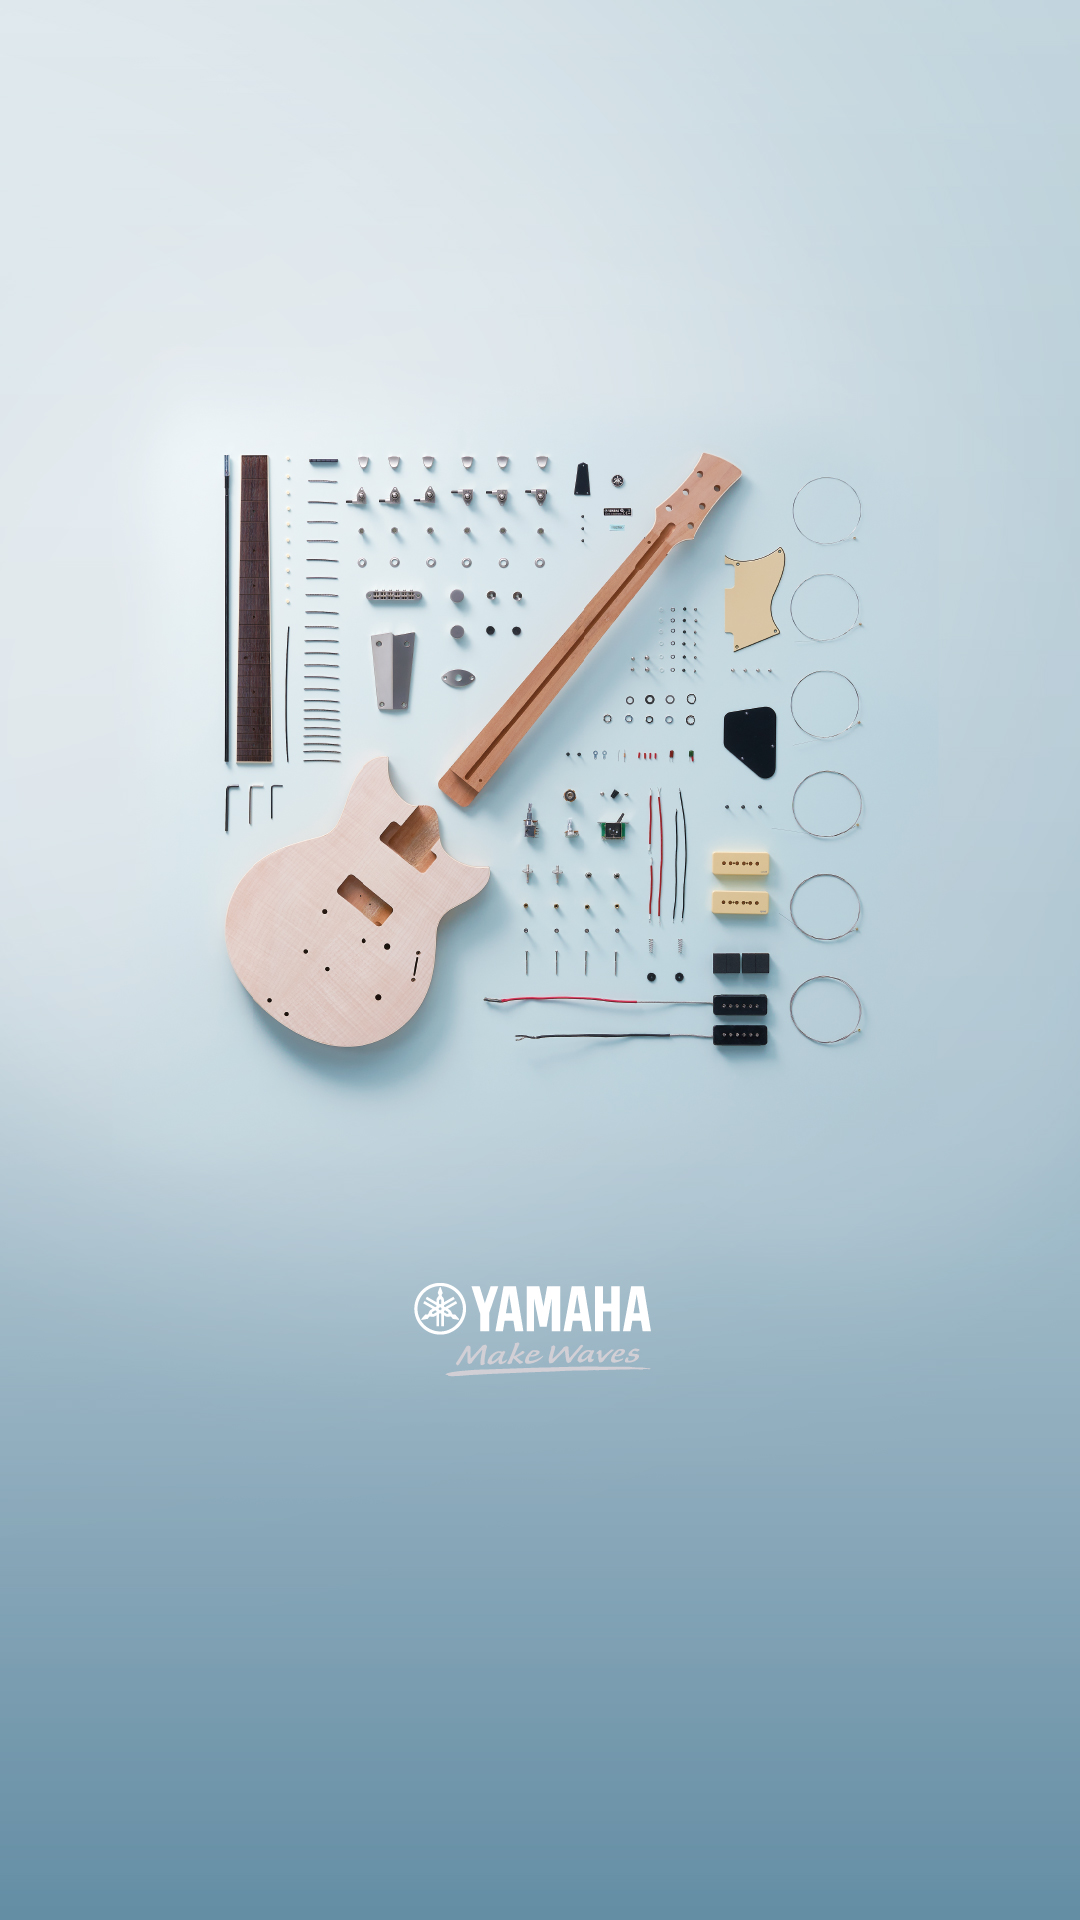 Twitter 上的 ヤマハ 音 音楽 Yamaha Music Japan スマホの壁紙用に縦長画像もご用意しております T Co Xtsh7xqeah Twitter